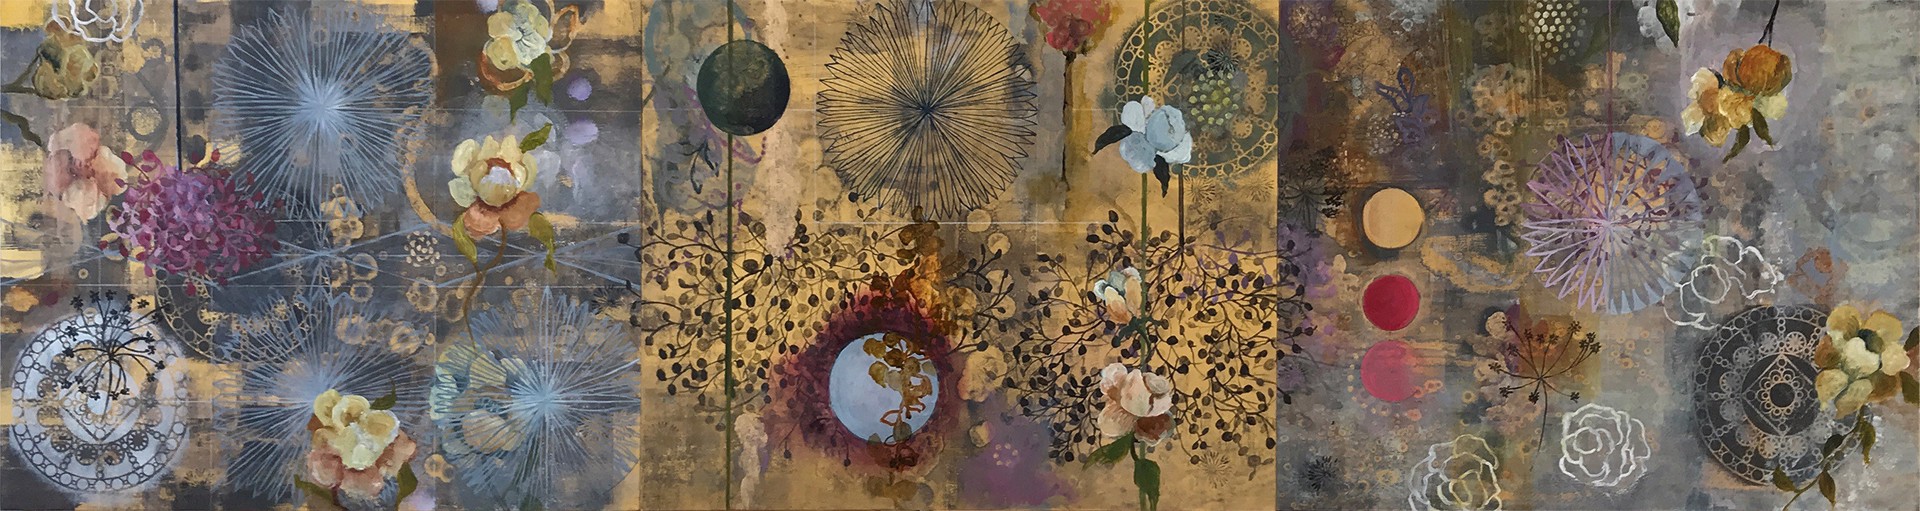 Dreamscape II (Triptych) by Betsy Margolius